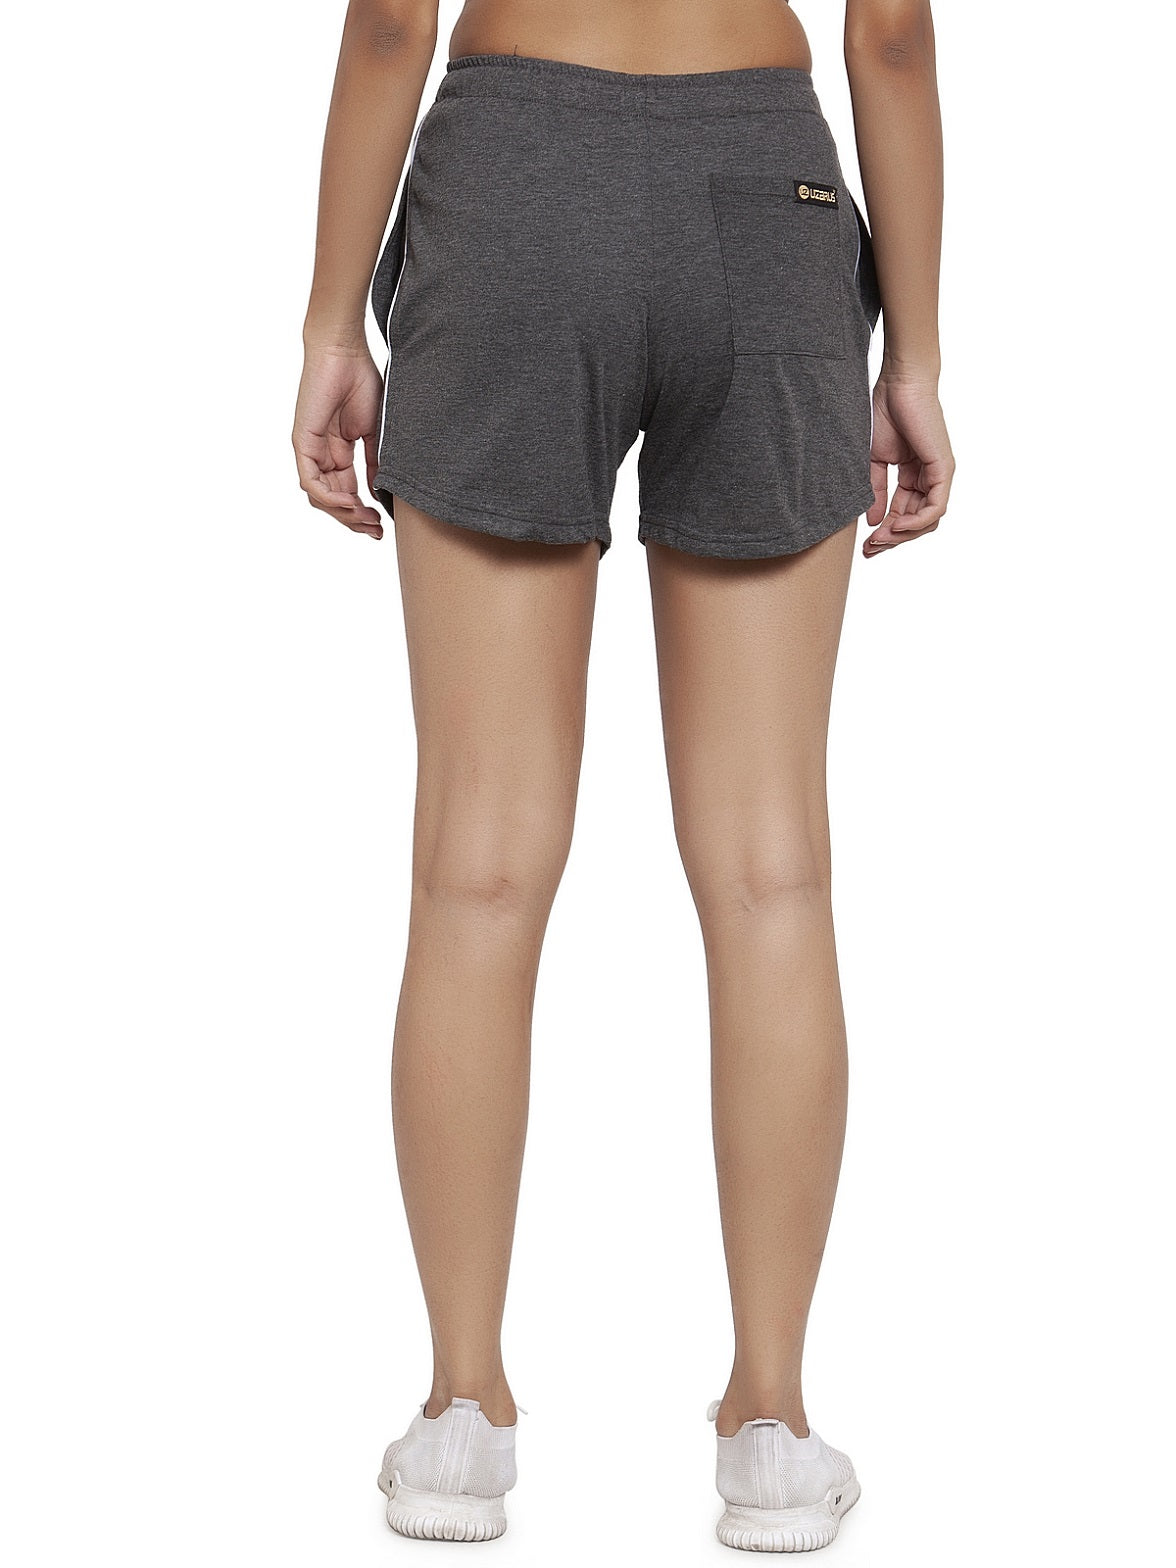 Women's Cotton Regular Shorts